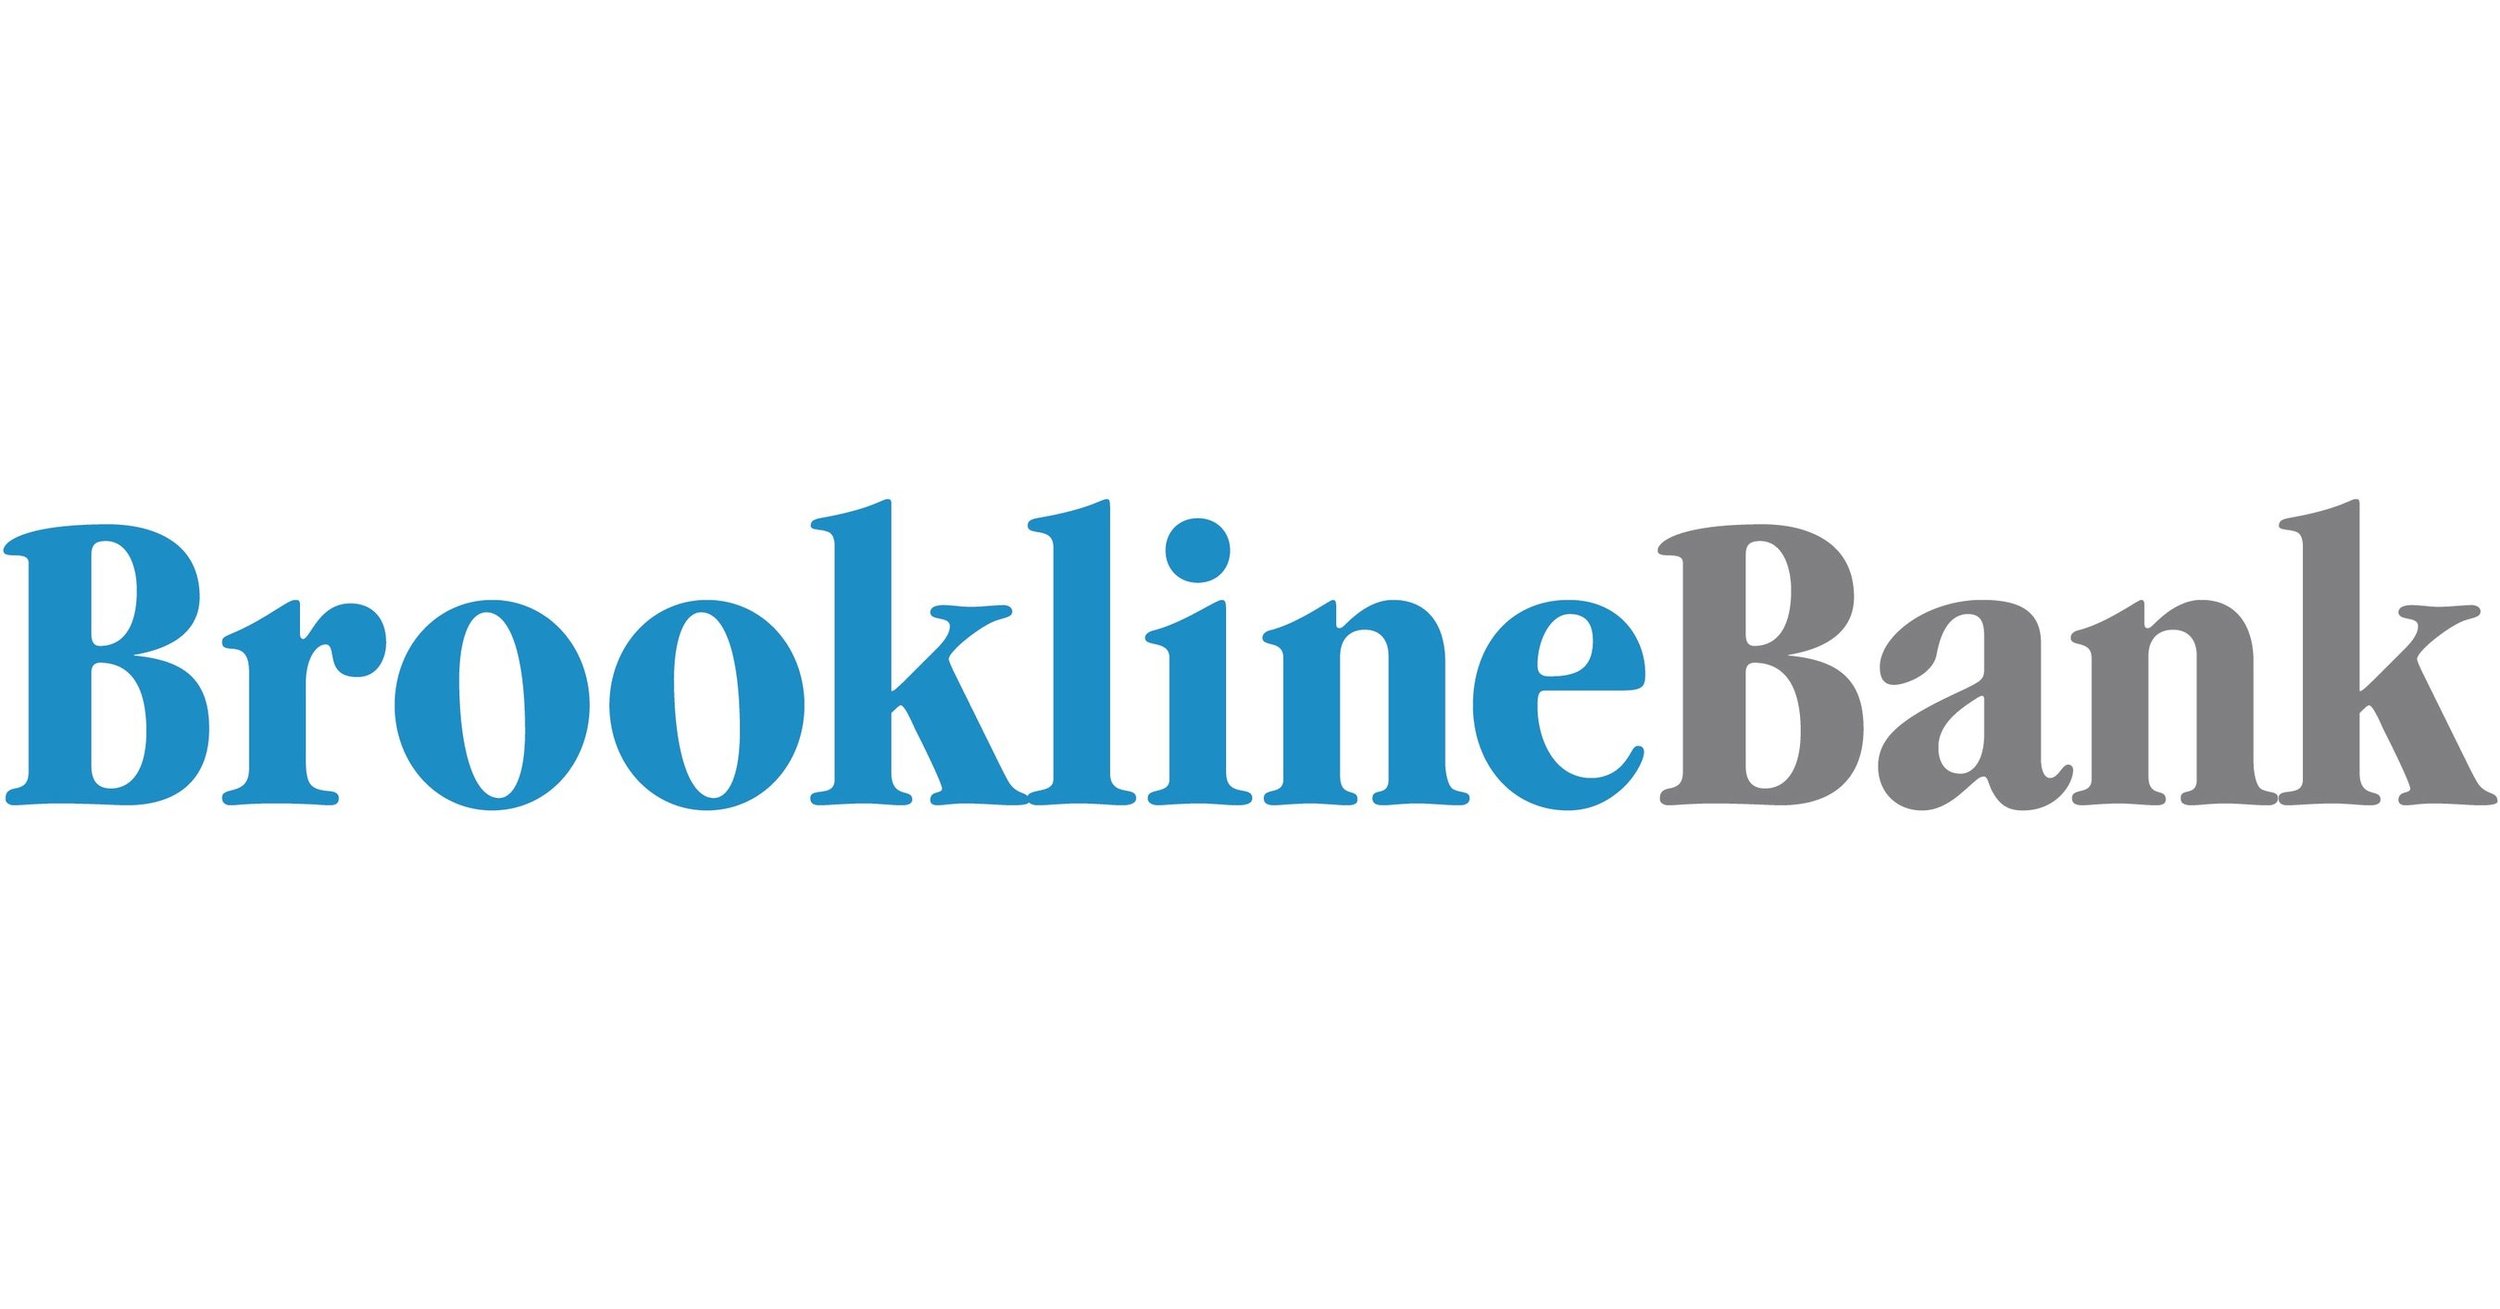 Brookline Bank logo from google.jpeg